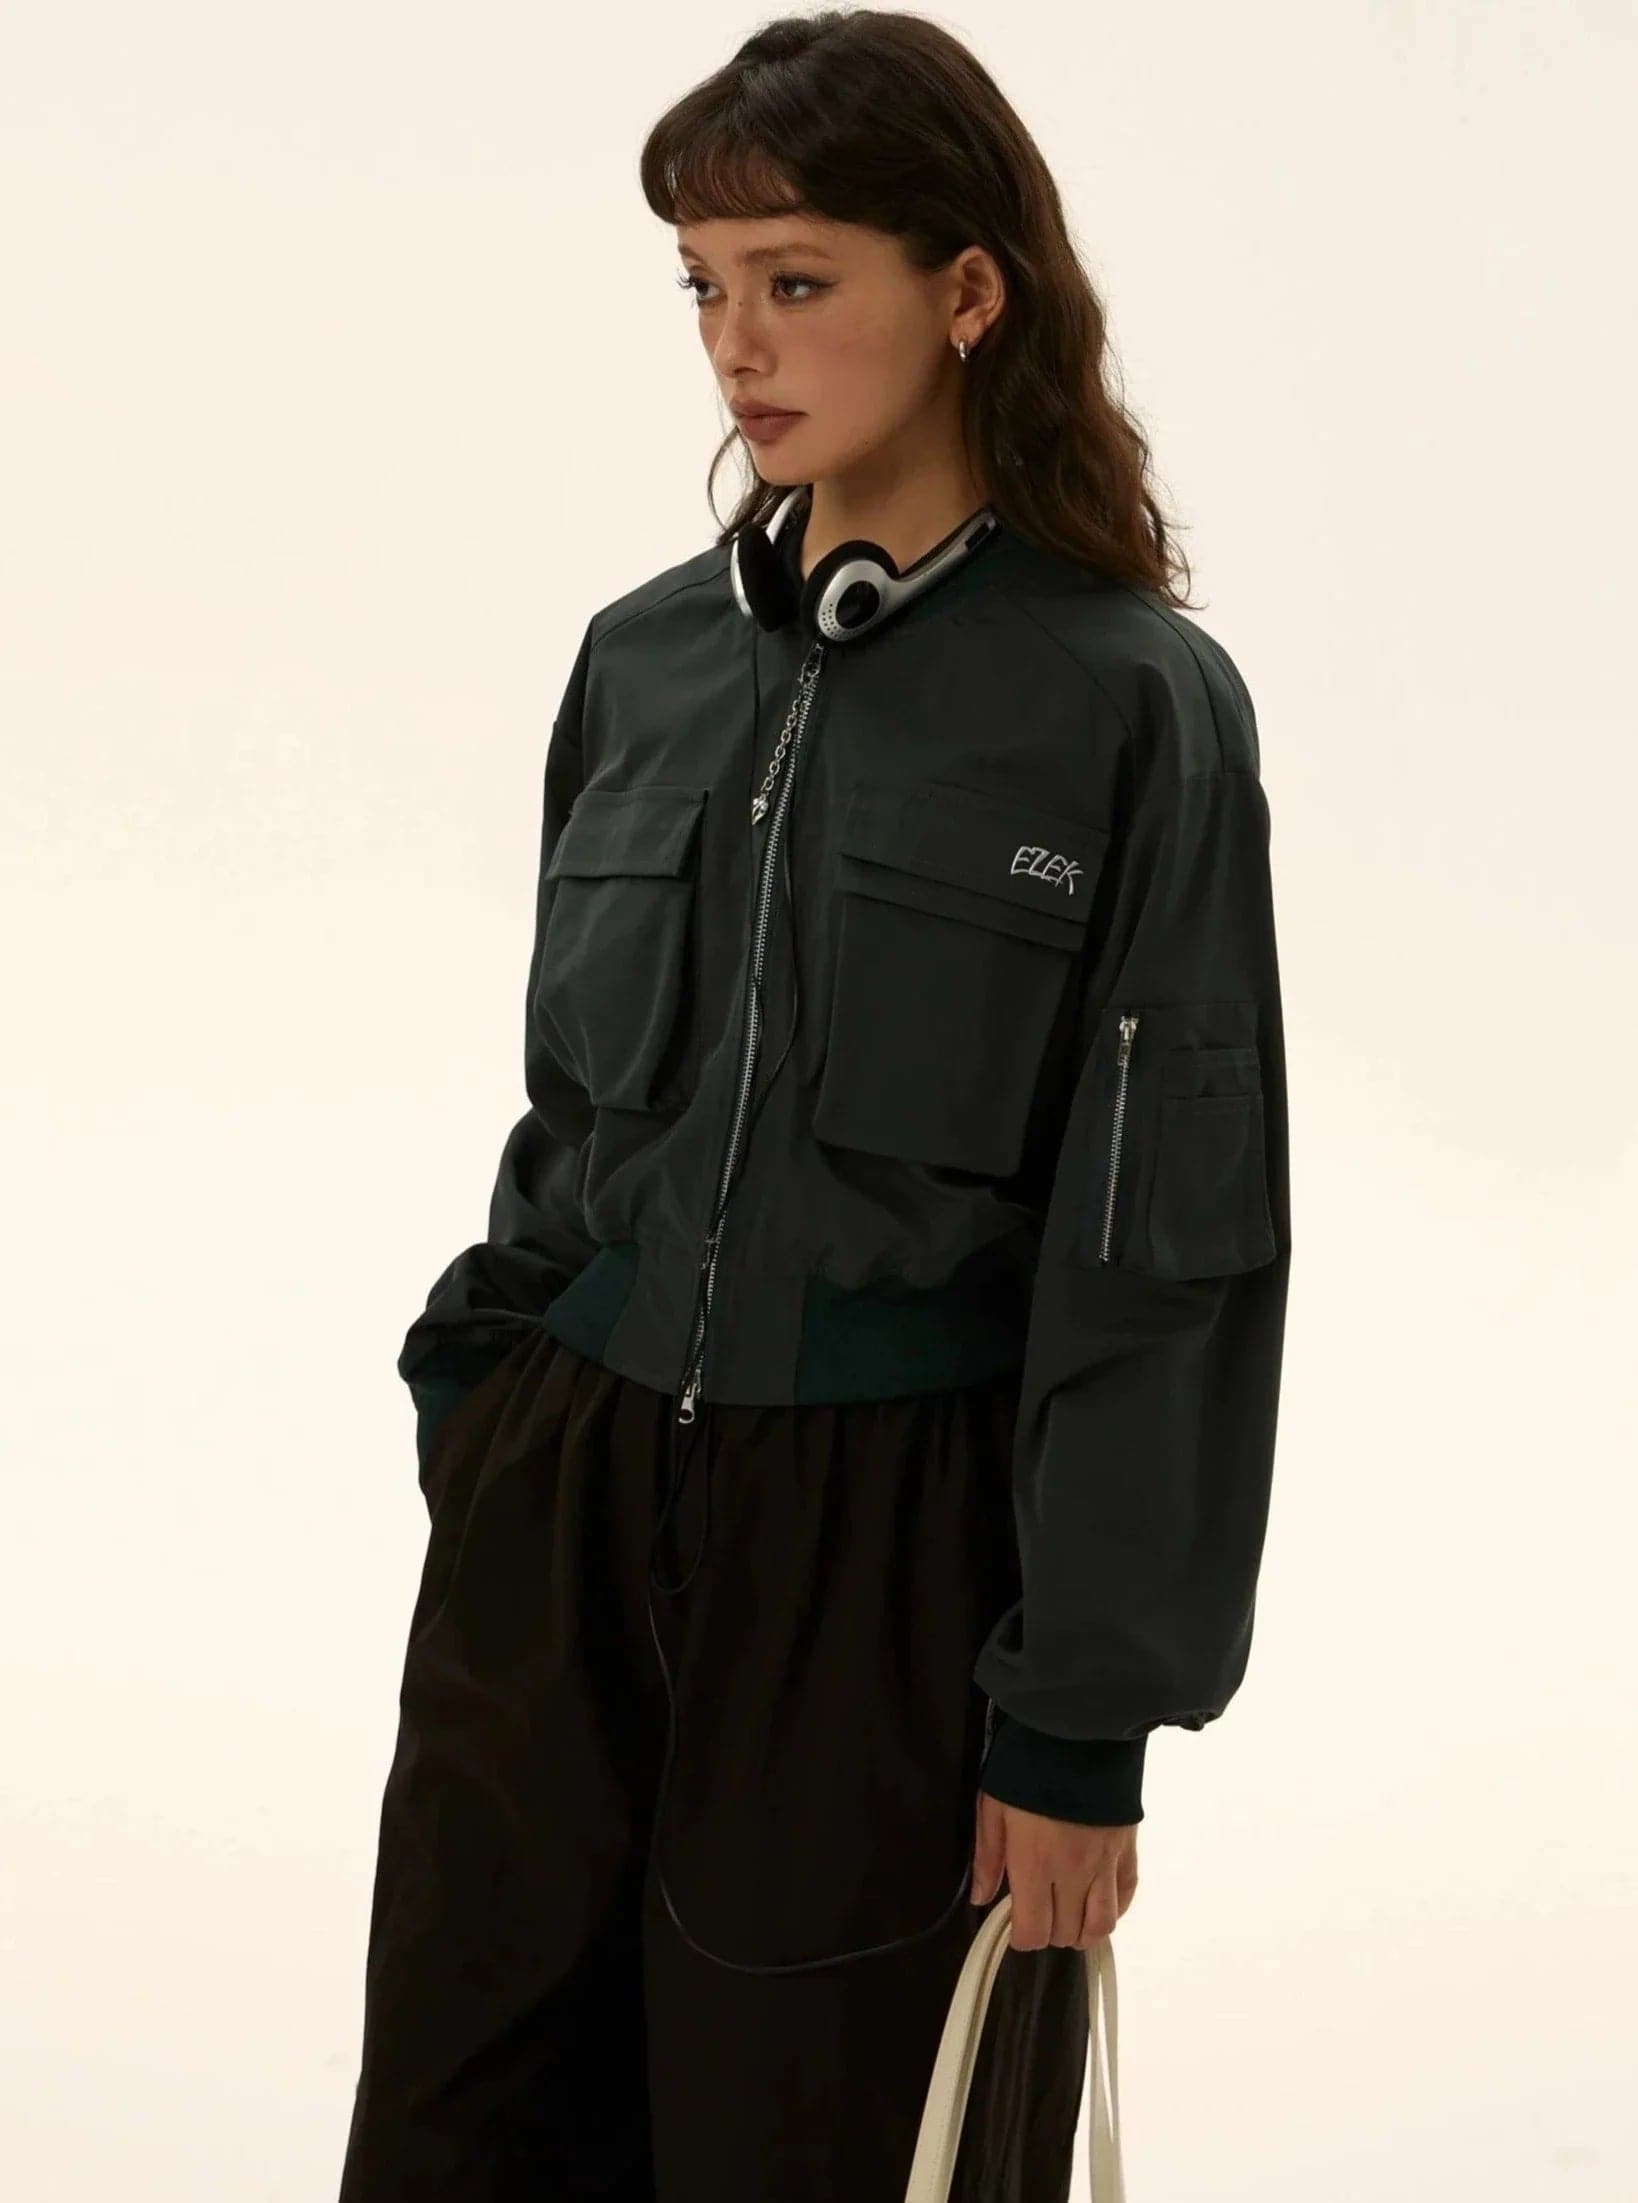 Chic Short Jacket For Fashionable Women - chiclara